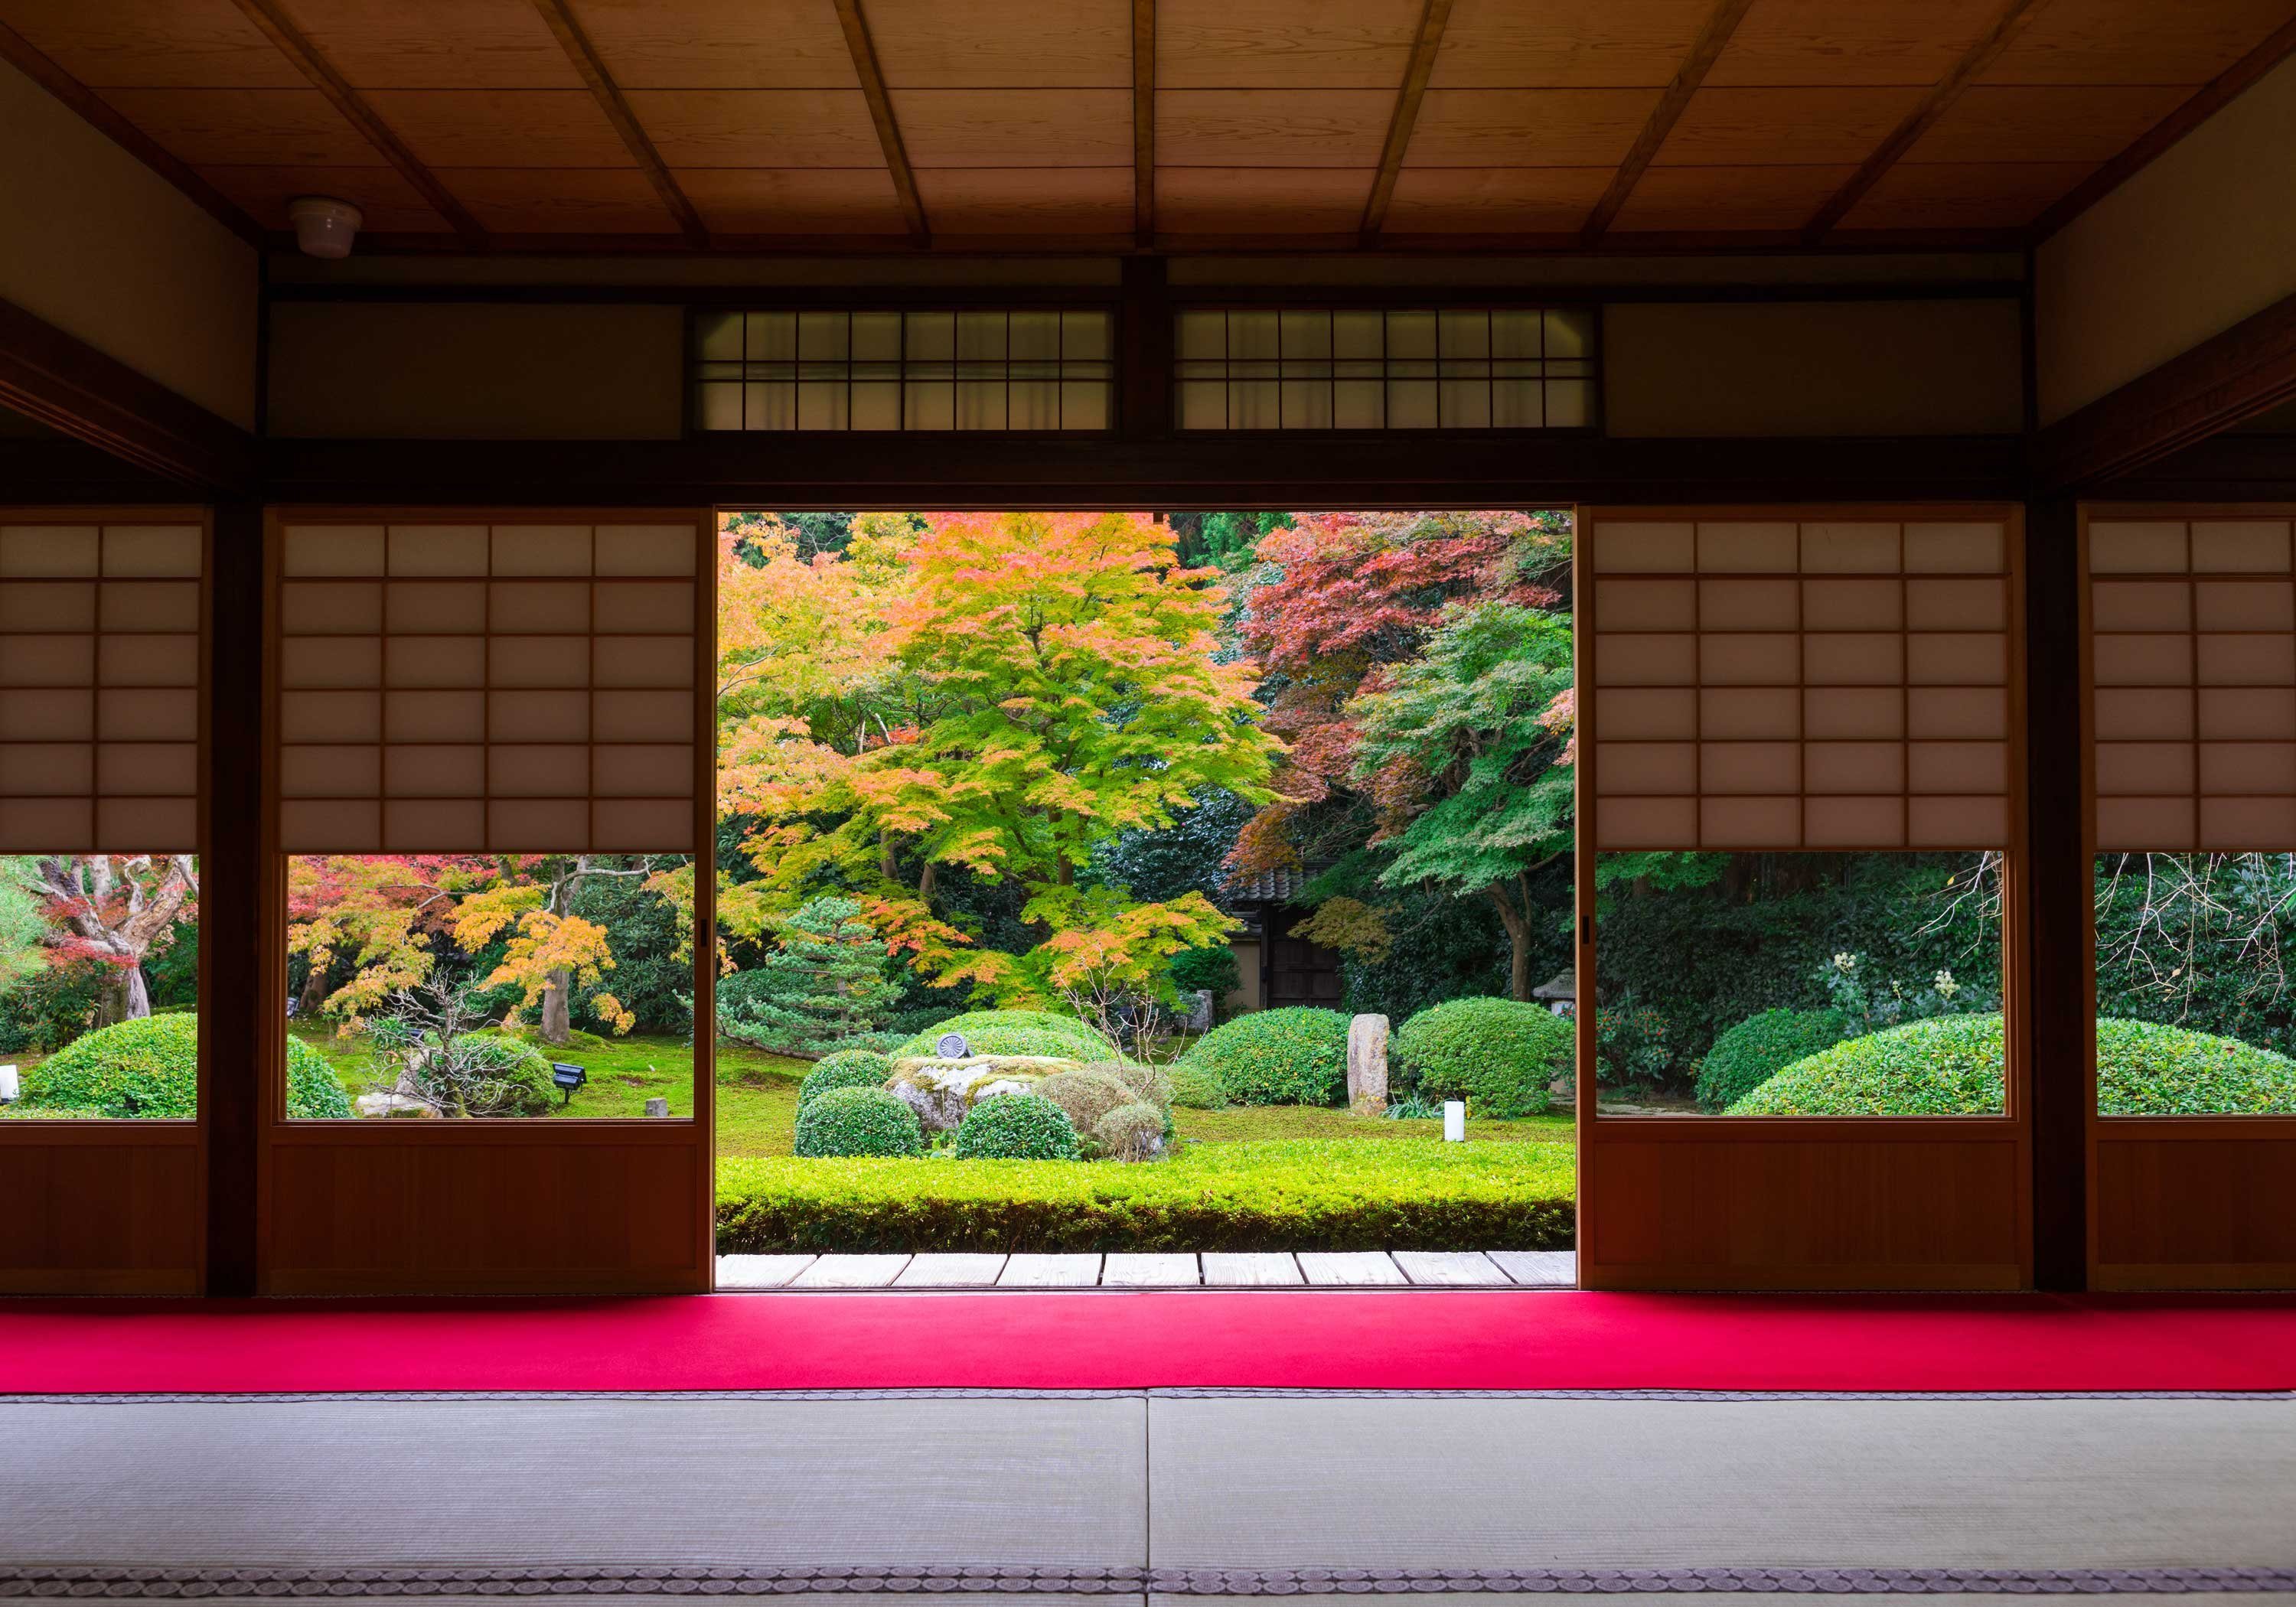 wandmotiv24 Fototapete Japanische Architektur Garten, glatt, Wandtapete, Motivtapete, matt, Vliestapete | Fototapeten